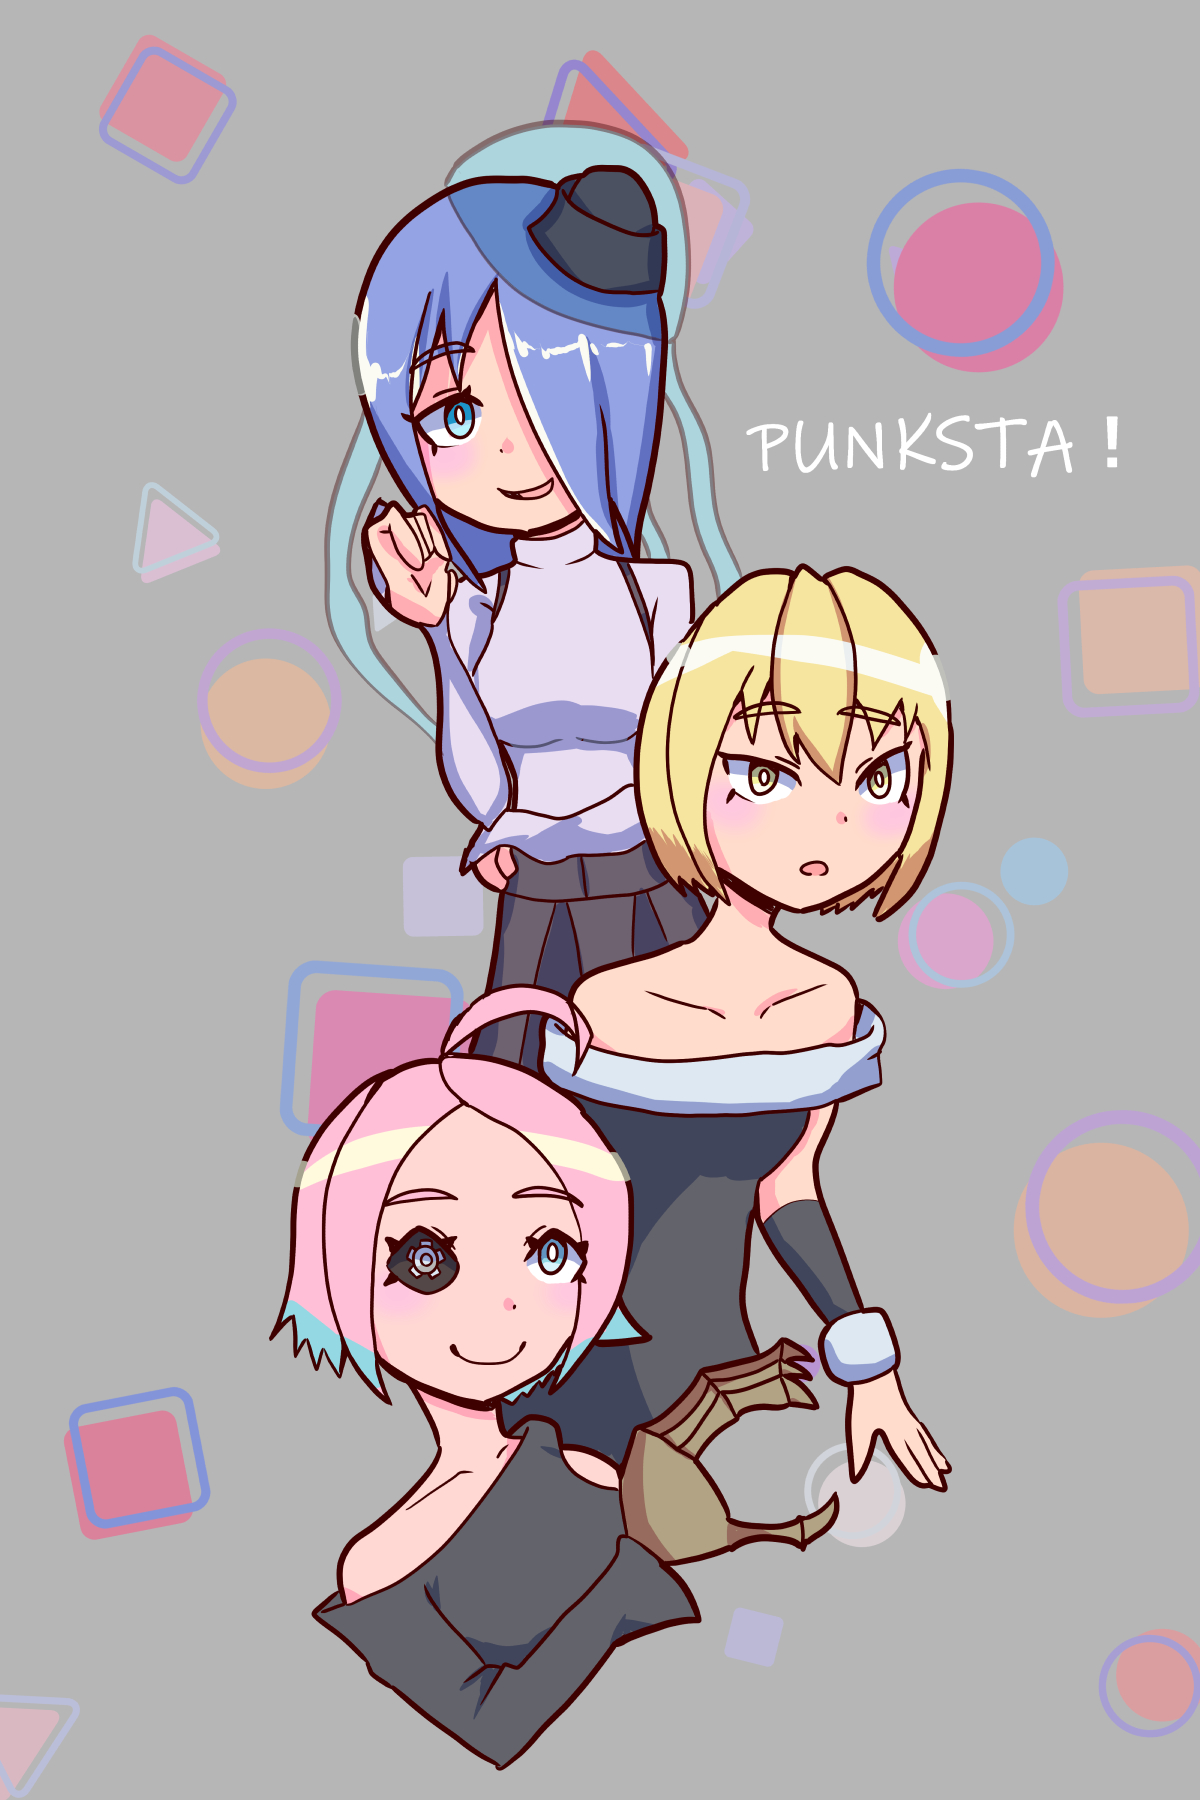 Punksta